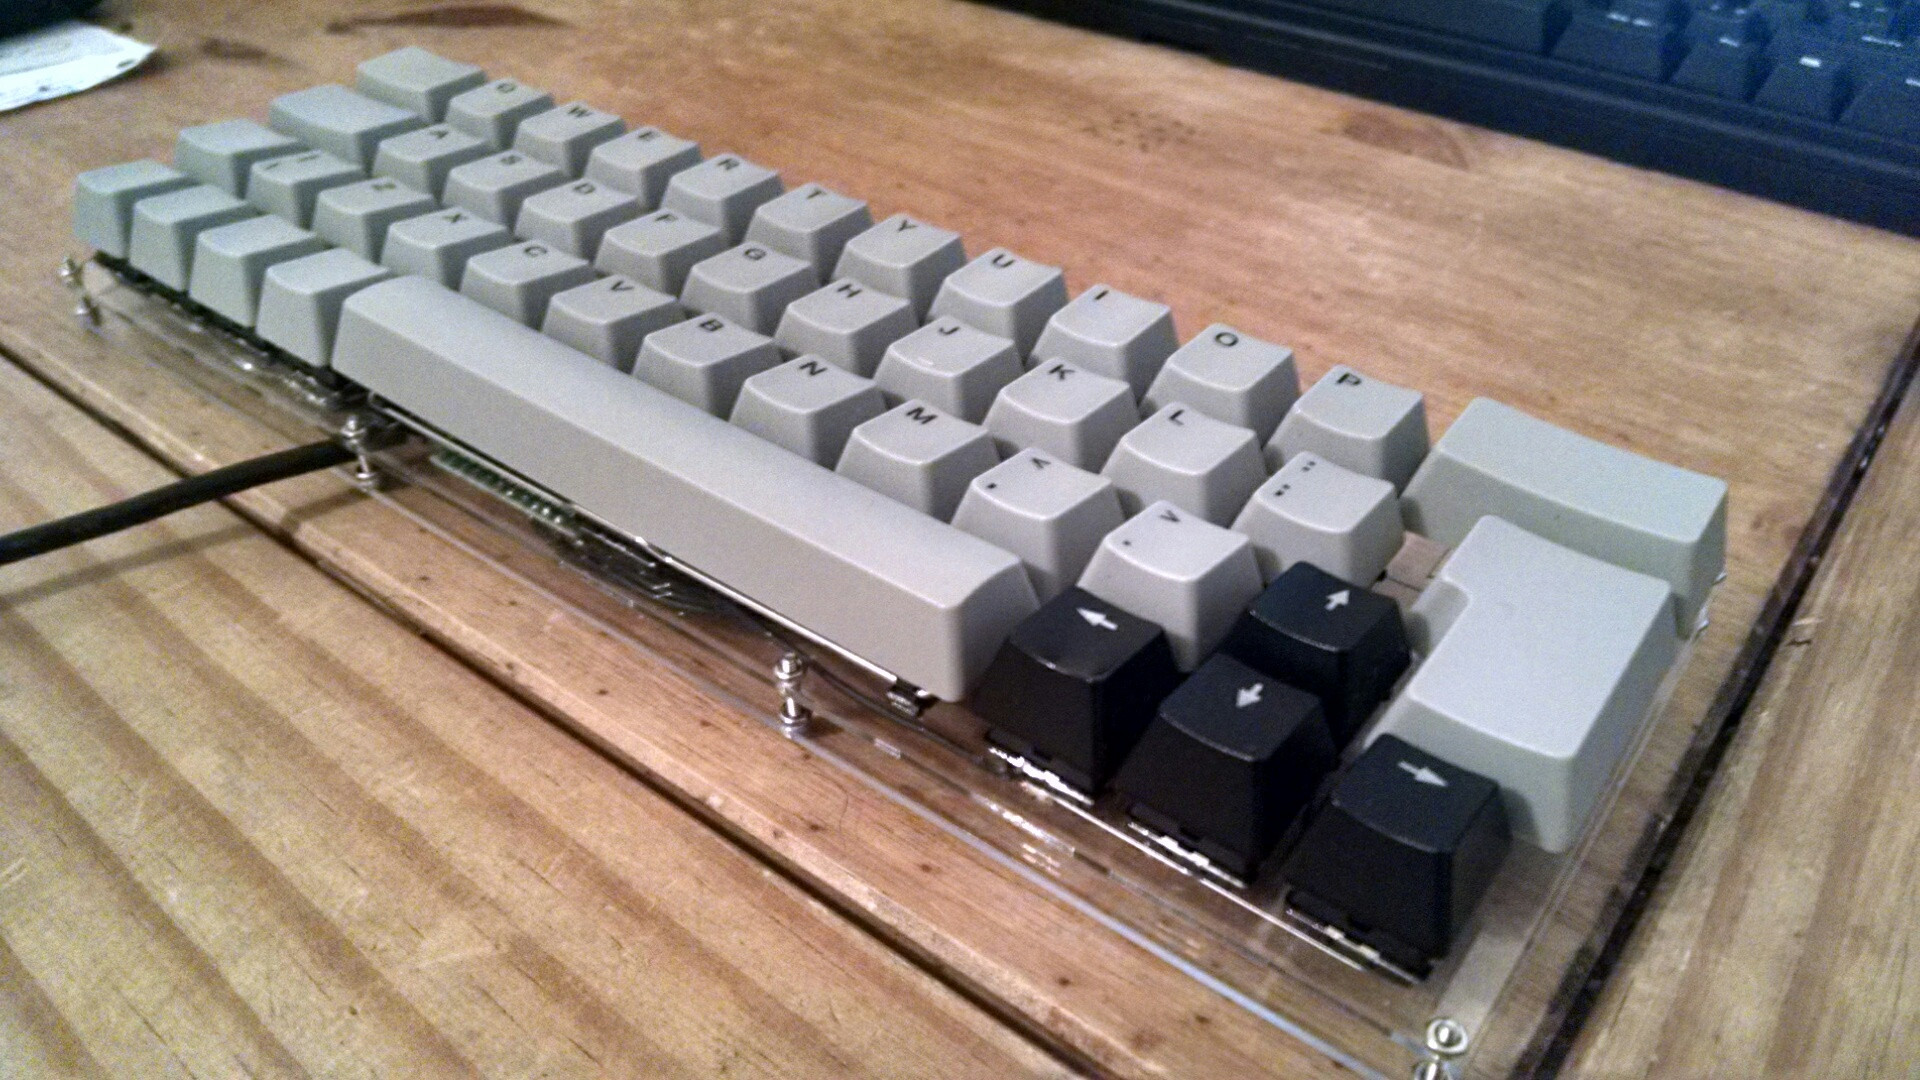 Cuthboard custom keyboard